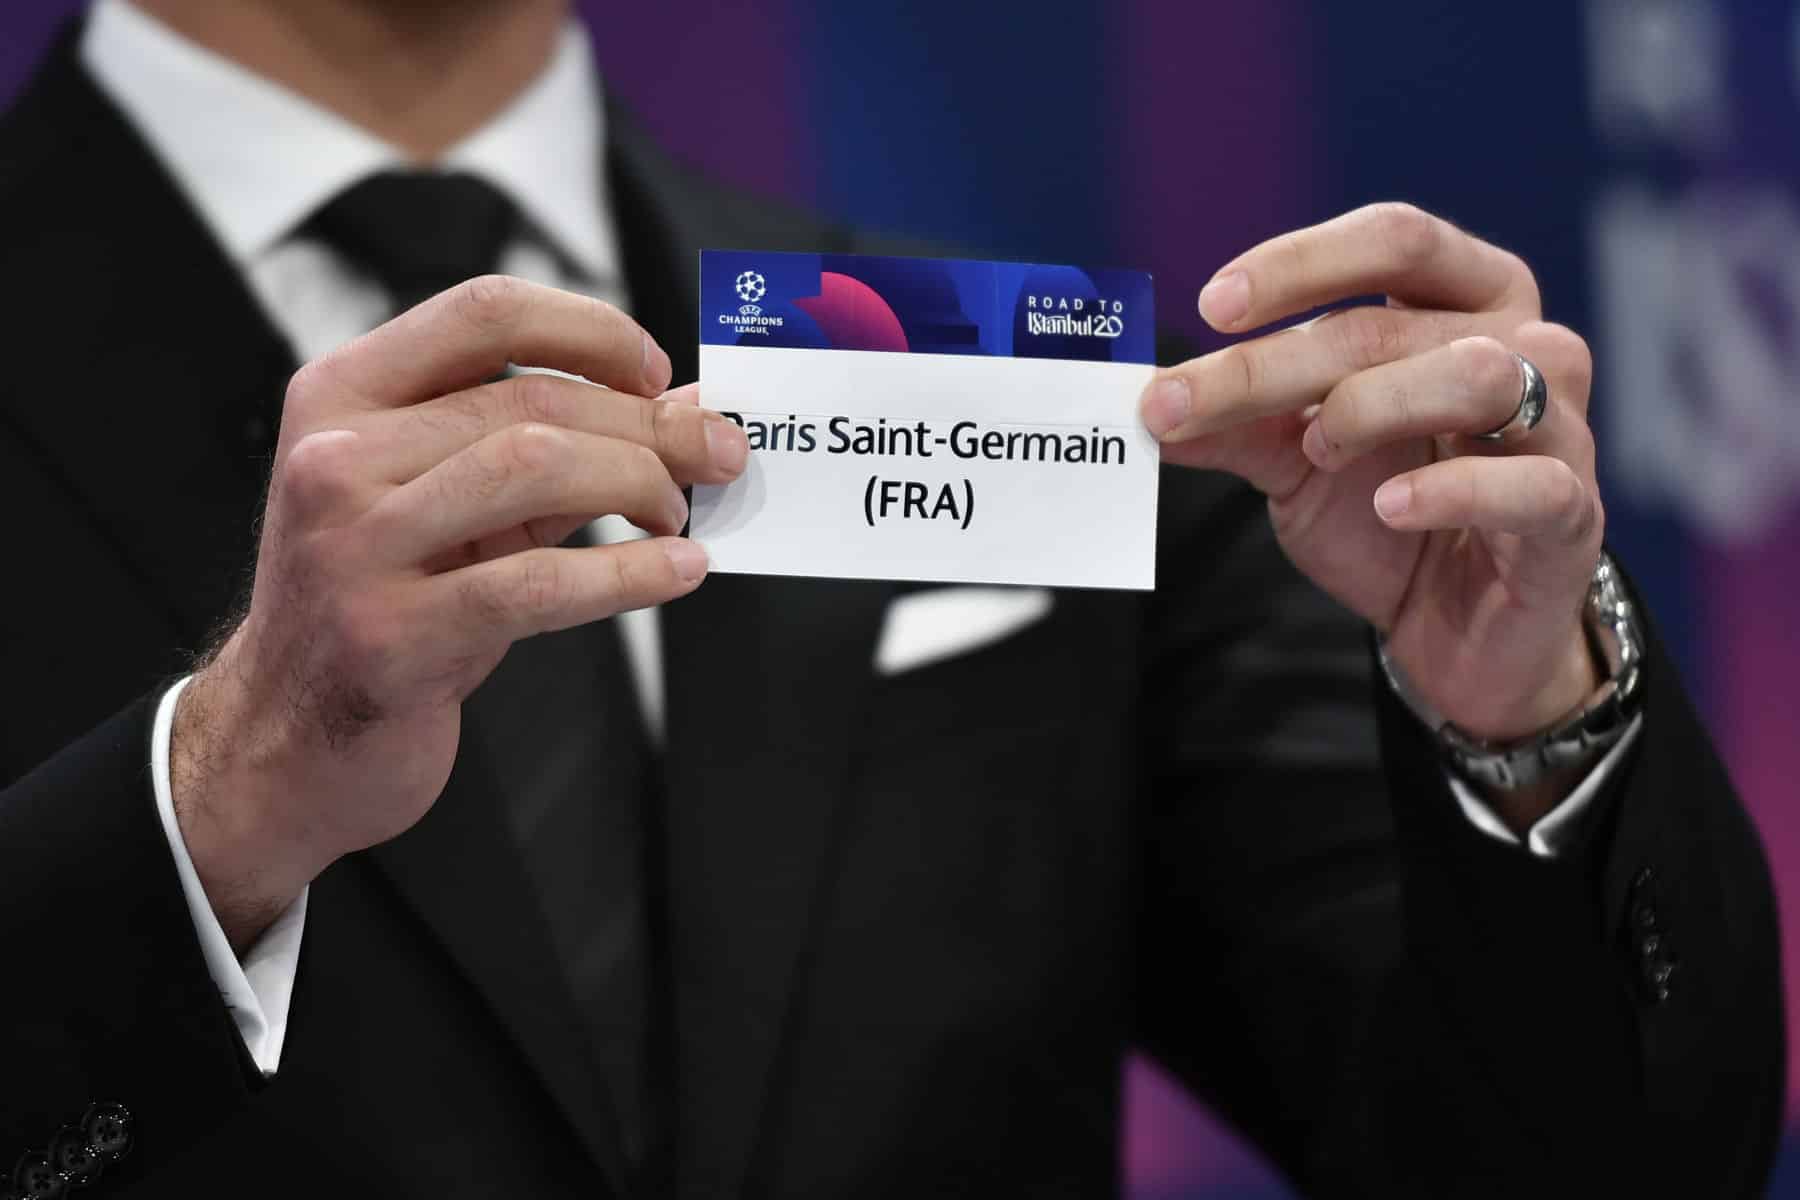 Paris Saint Germain Round of 16 Champions League Draw 2019